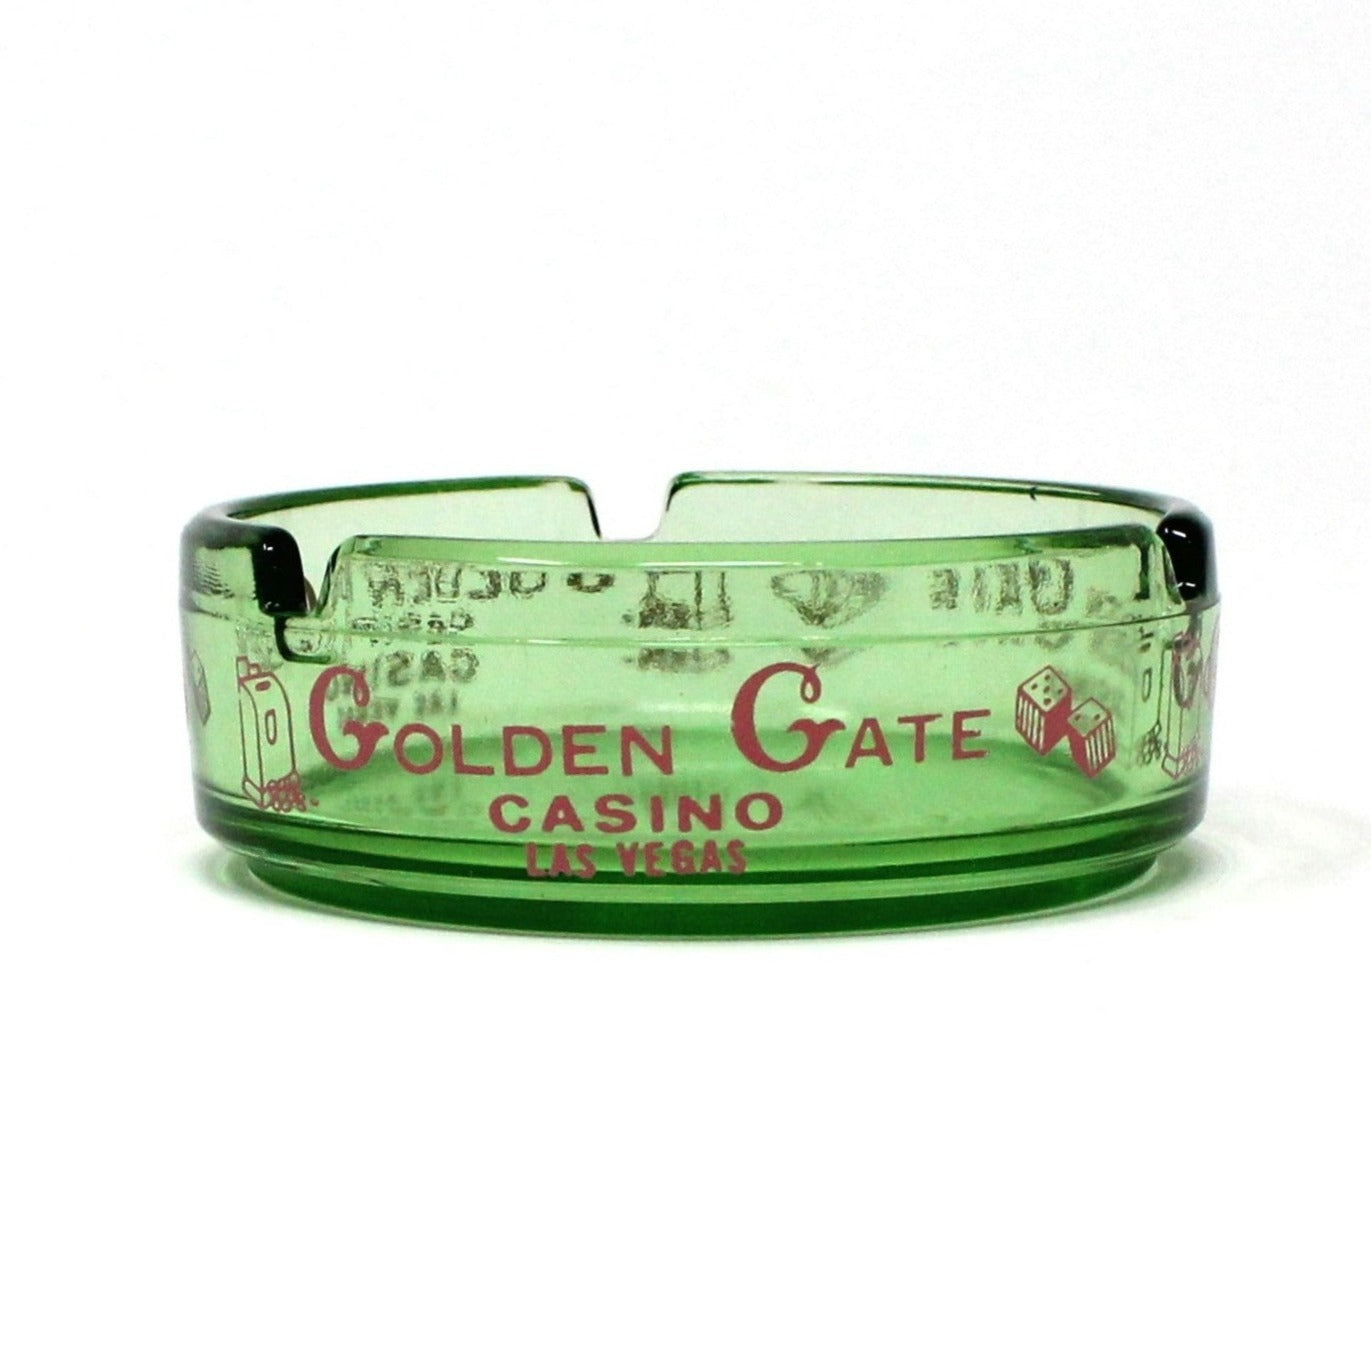 Ashtray, Casino Souvenir, Golden Gate Casino, Las Vegas Nevada, Vintage